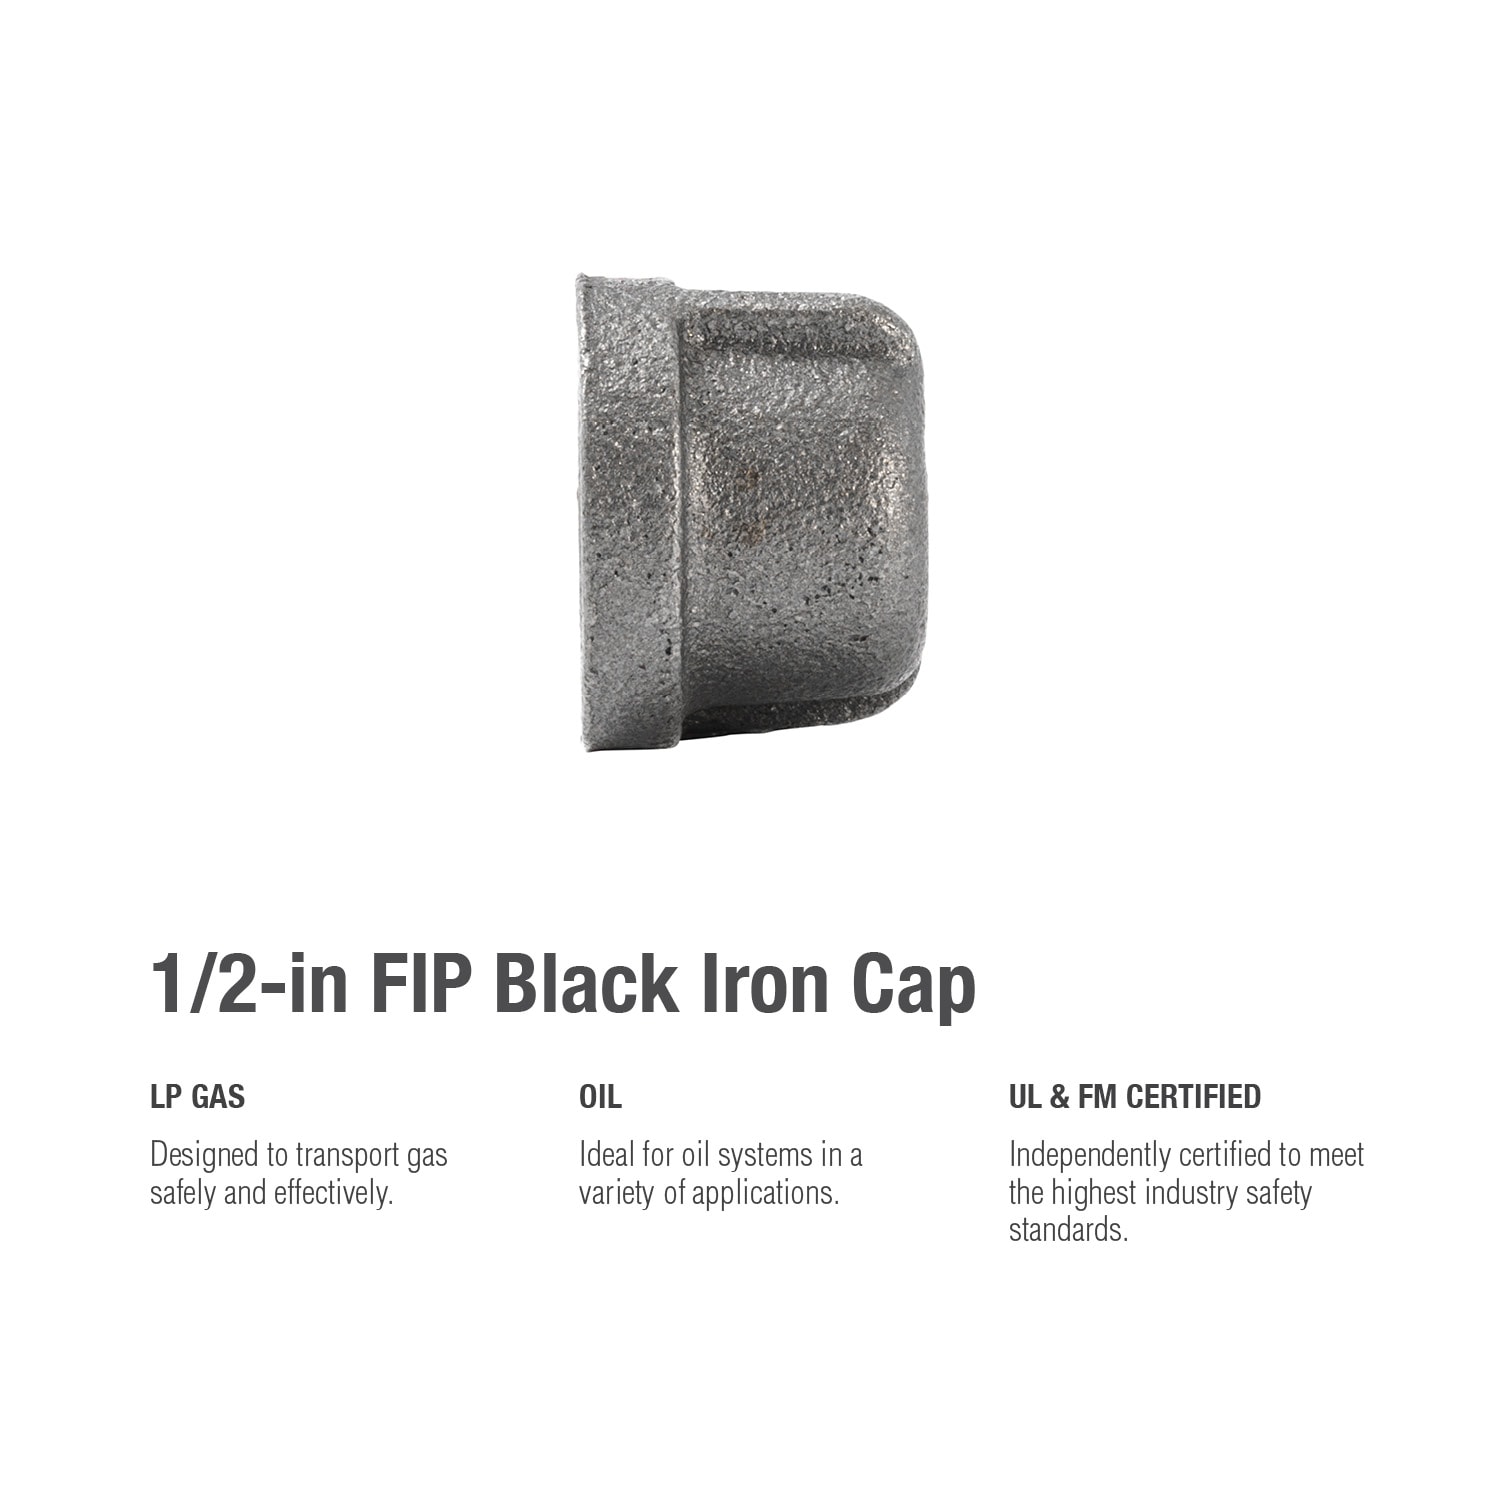 RELIABILT 1/2-in Black Iron Cap Fitting in the Black Pipe 